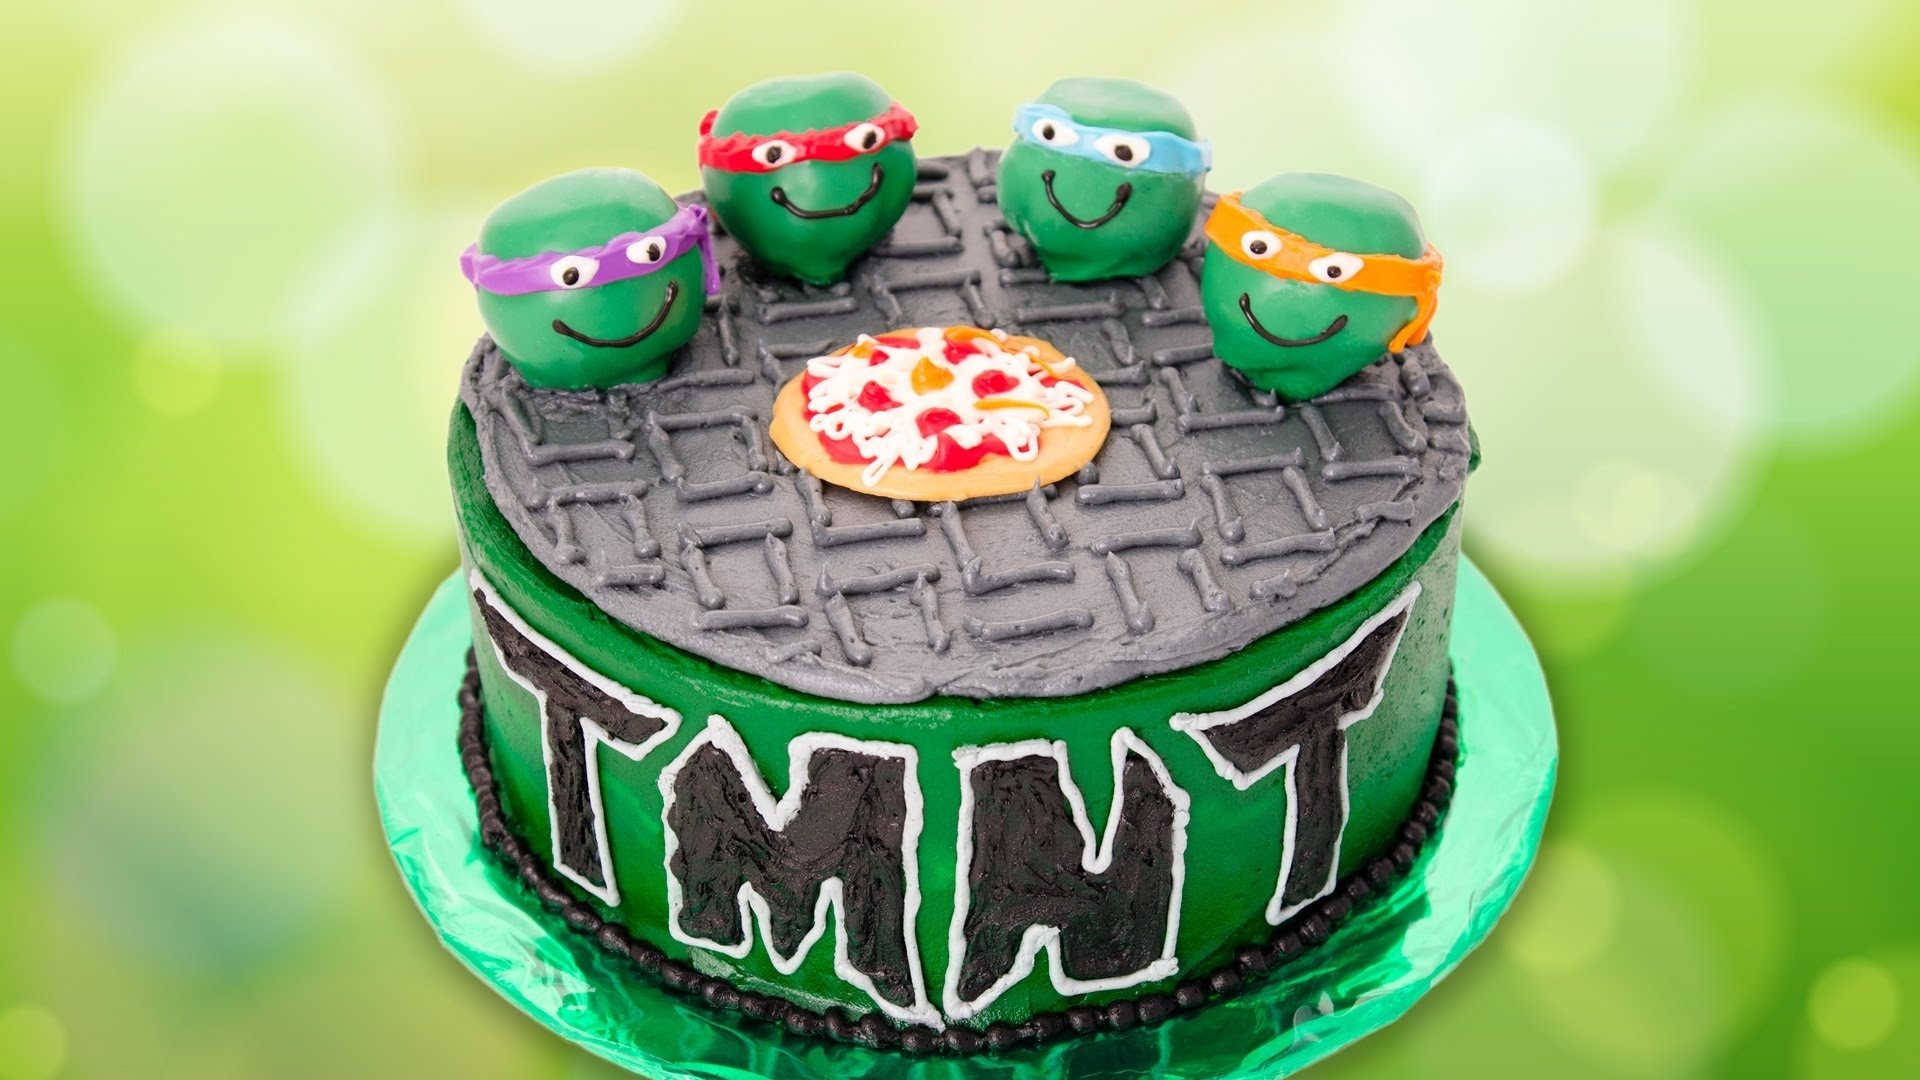 10 Fashionable Teenage Mutant Ninja Turtles Cake Ideas teenage mutant ninja turtles cake from cookies cupcakes and cardio 1 2022